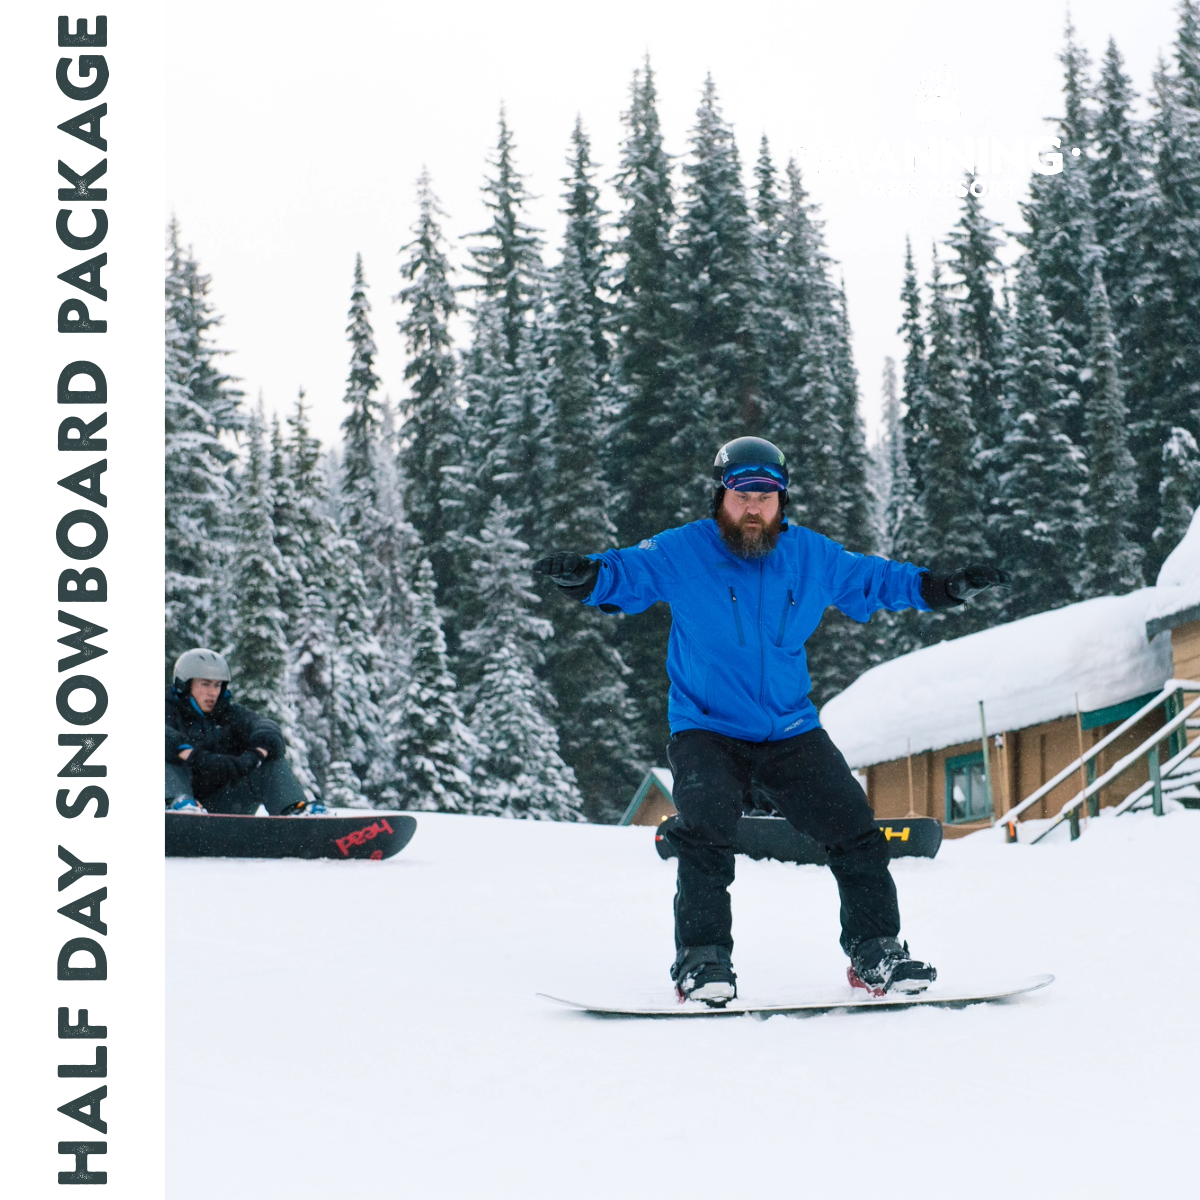 Half Day Snowboard Rental Package